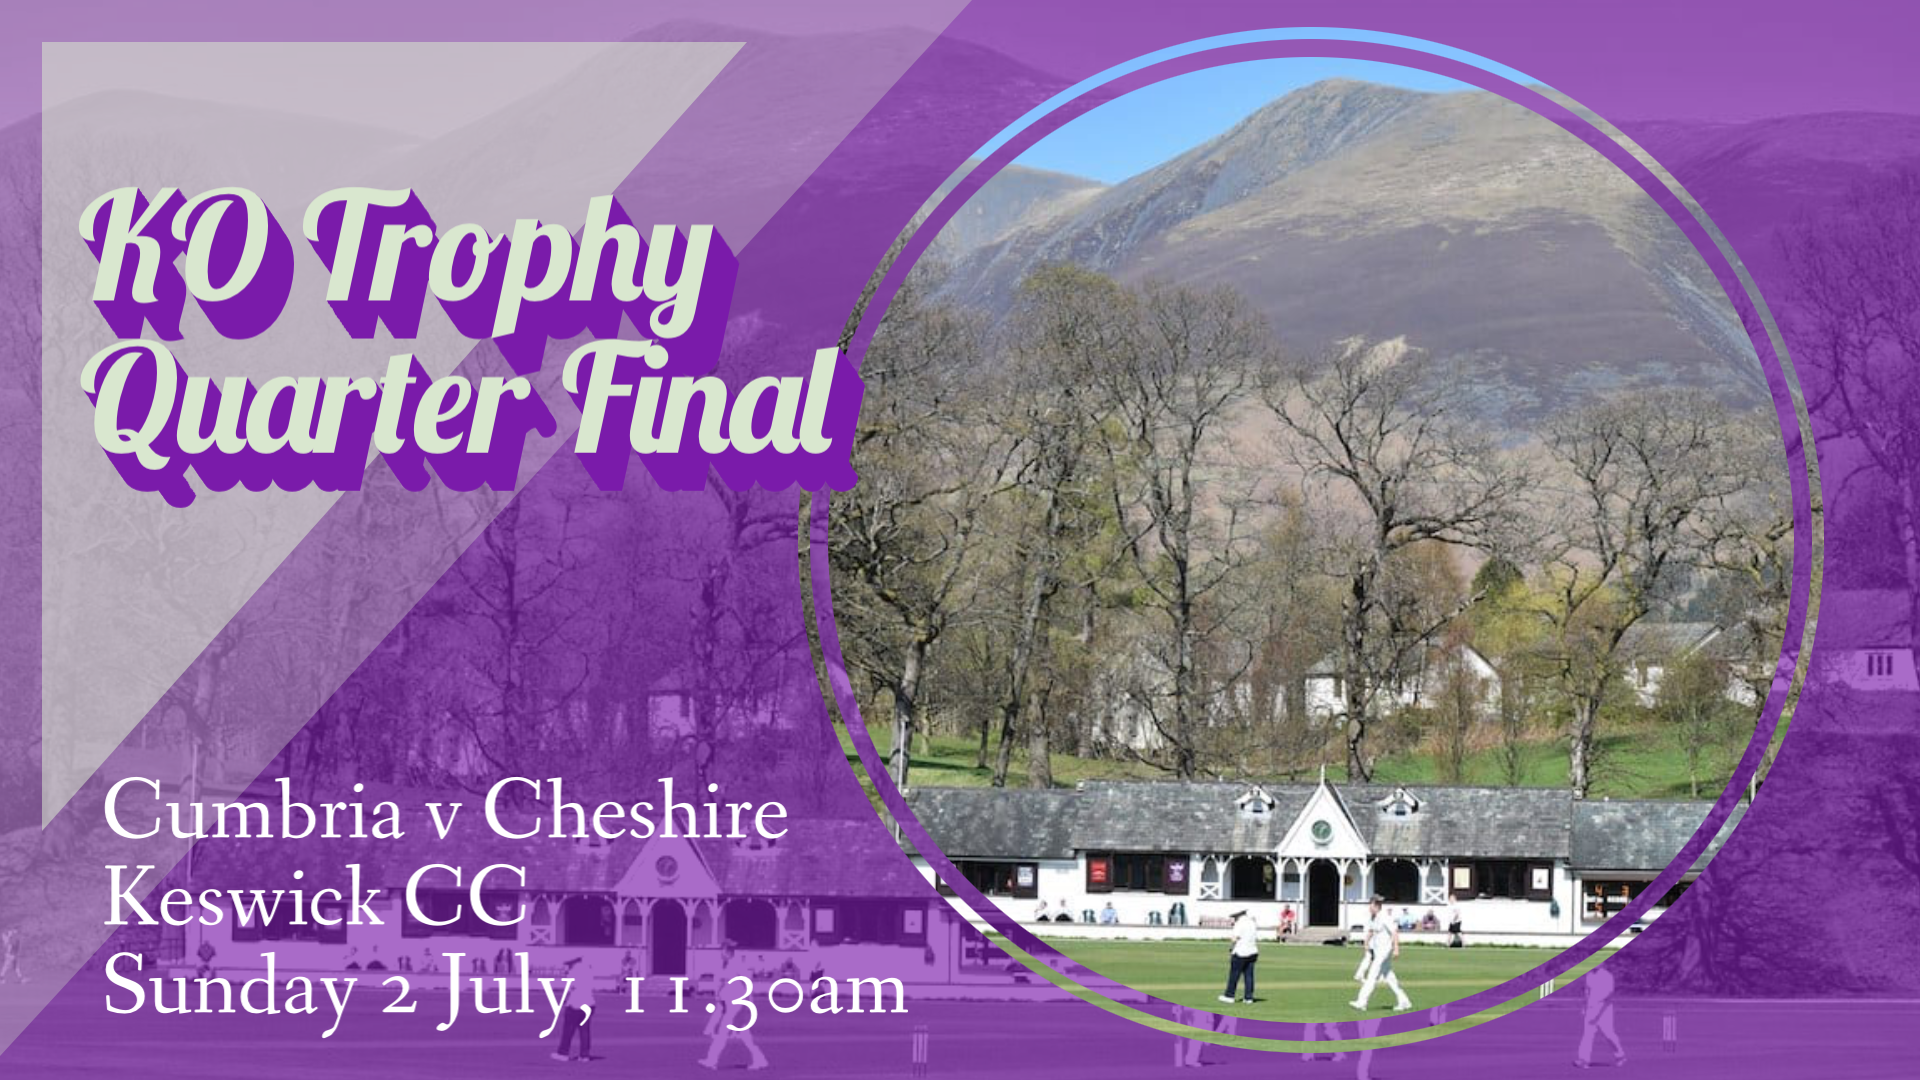 KO Trophy Quarter Final: Cumbria v Cheshire, Sunday 2 July 